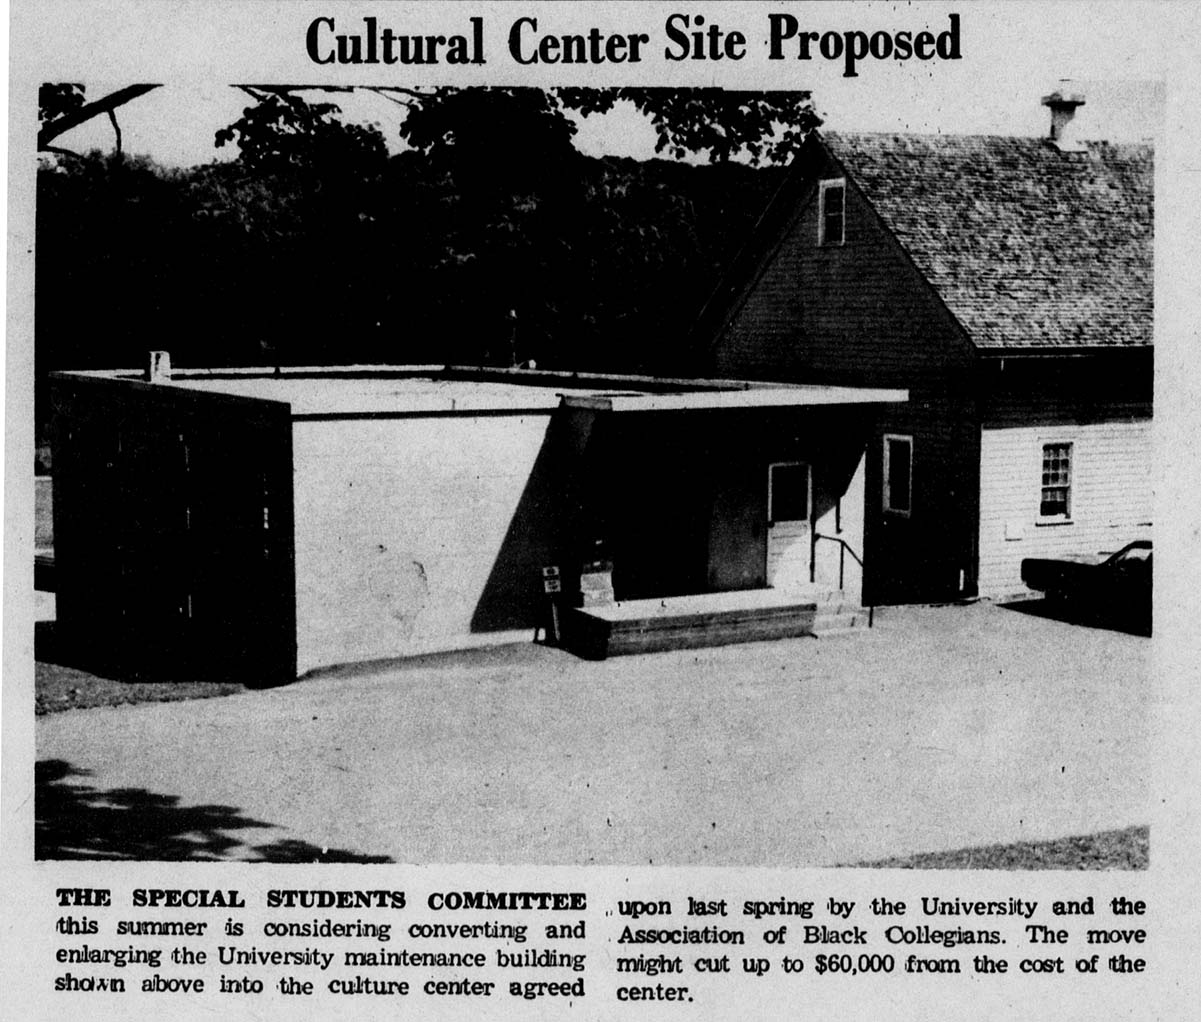 Maintenance building as proposed cultural center site, 1969